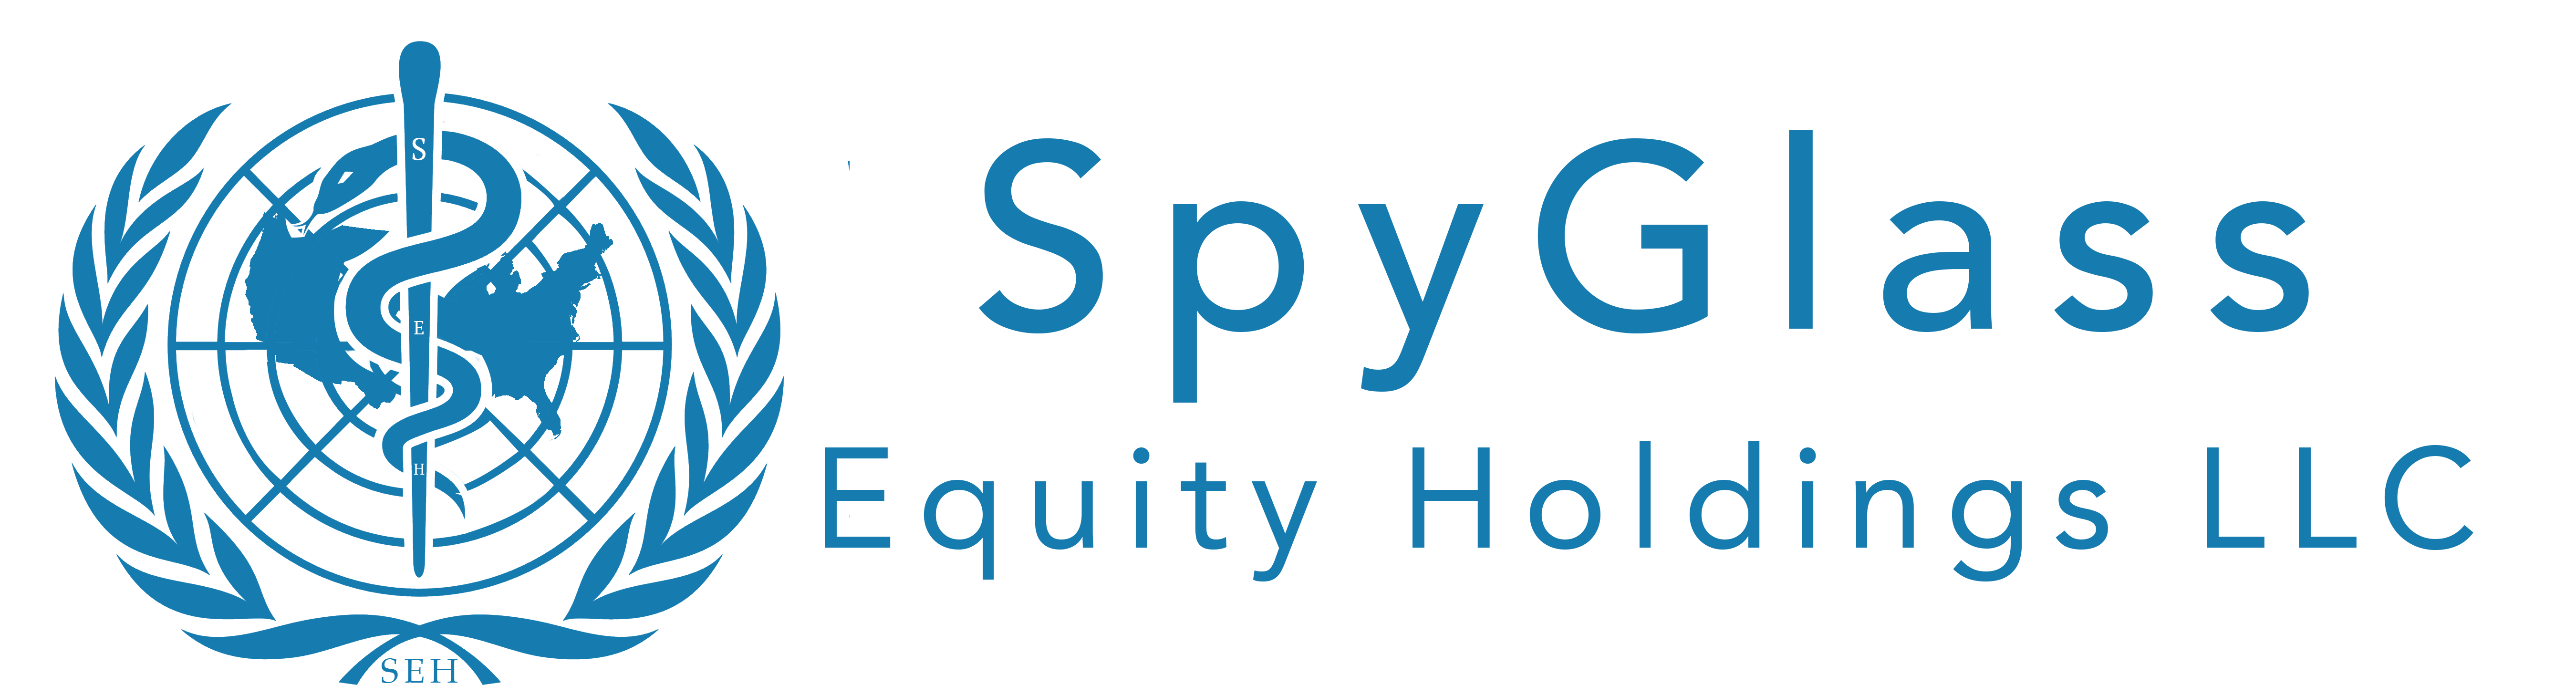 SpyGlass Equity Holdings LLC